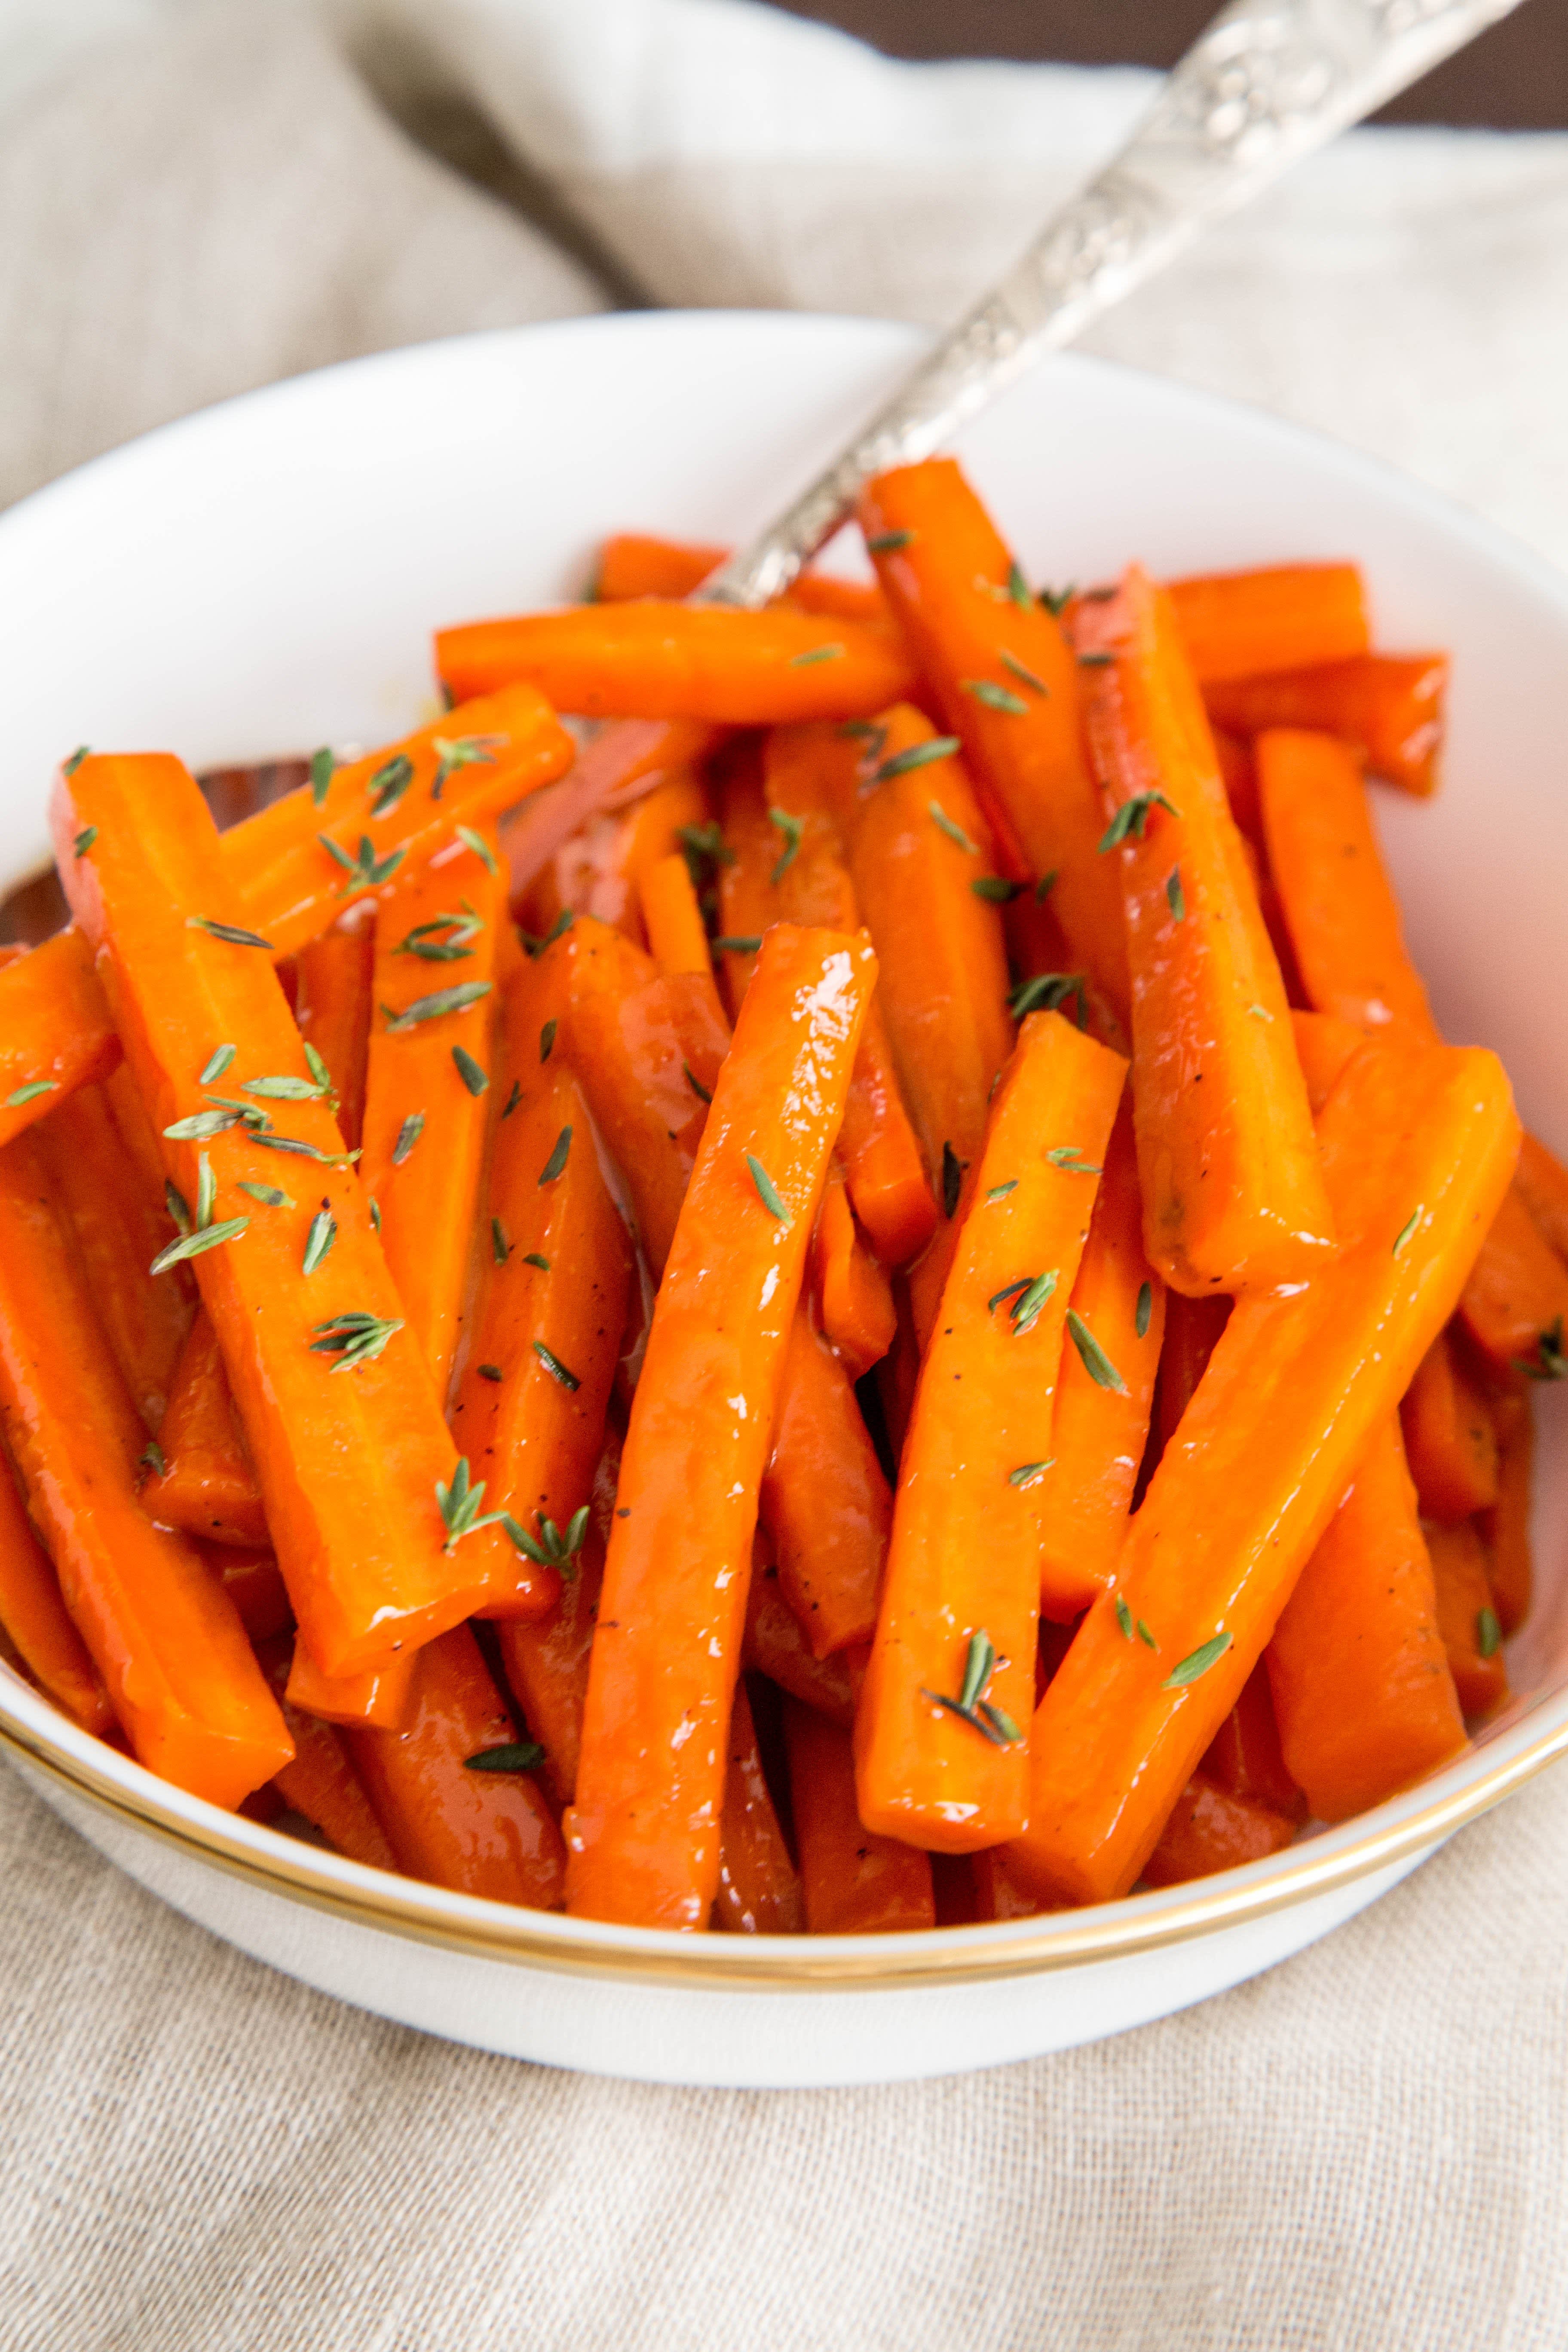 How To Make Glazed Carrots | Kitchn